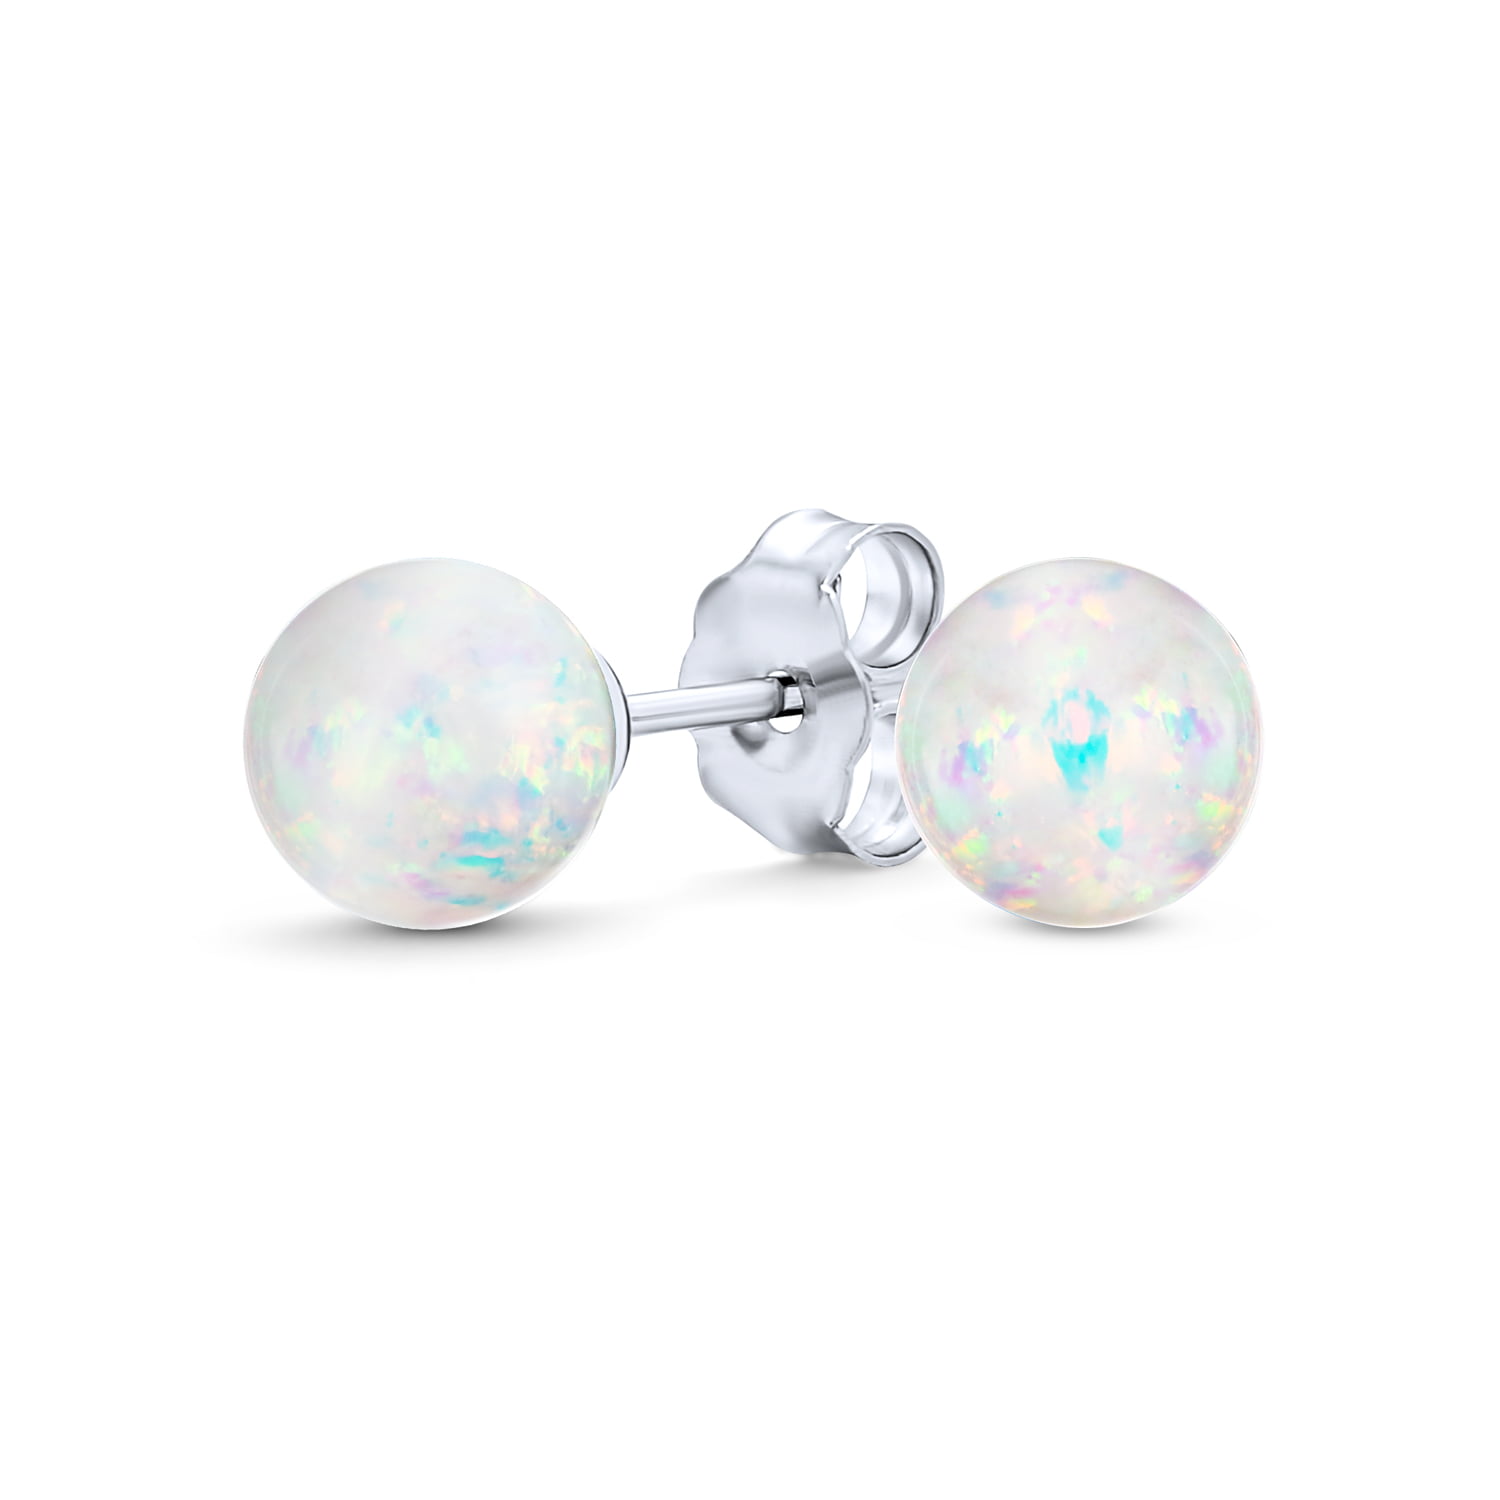 Pls Choose Size Pair of 925 Sterling Silver White Opal Ball Stud Earrings